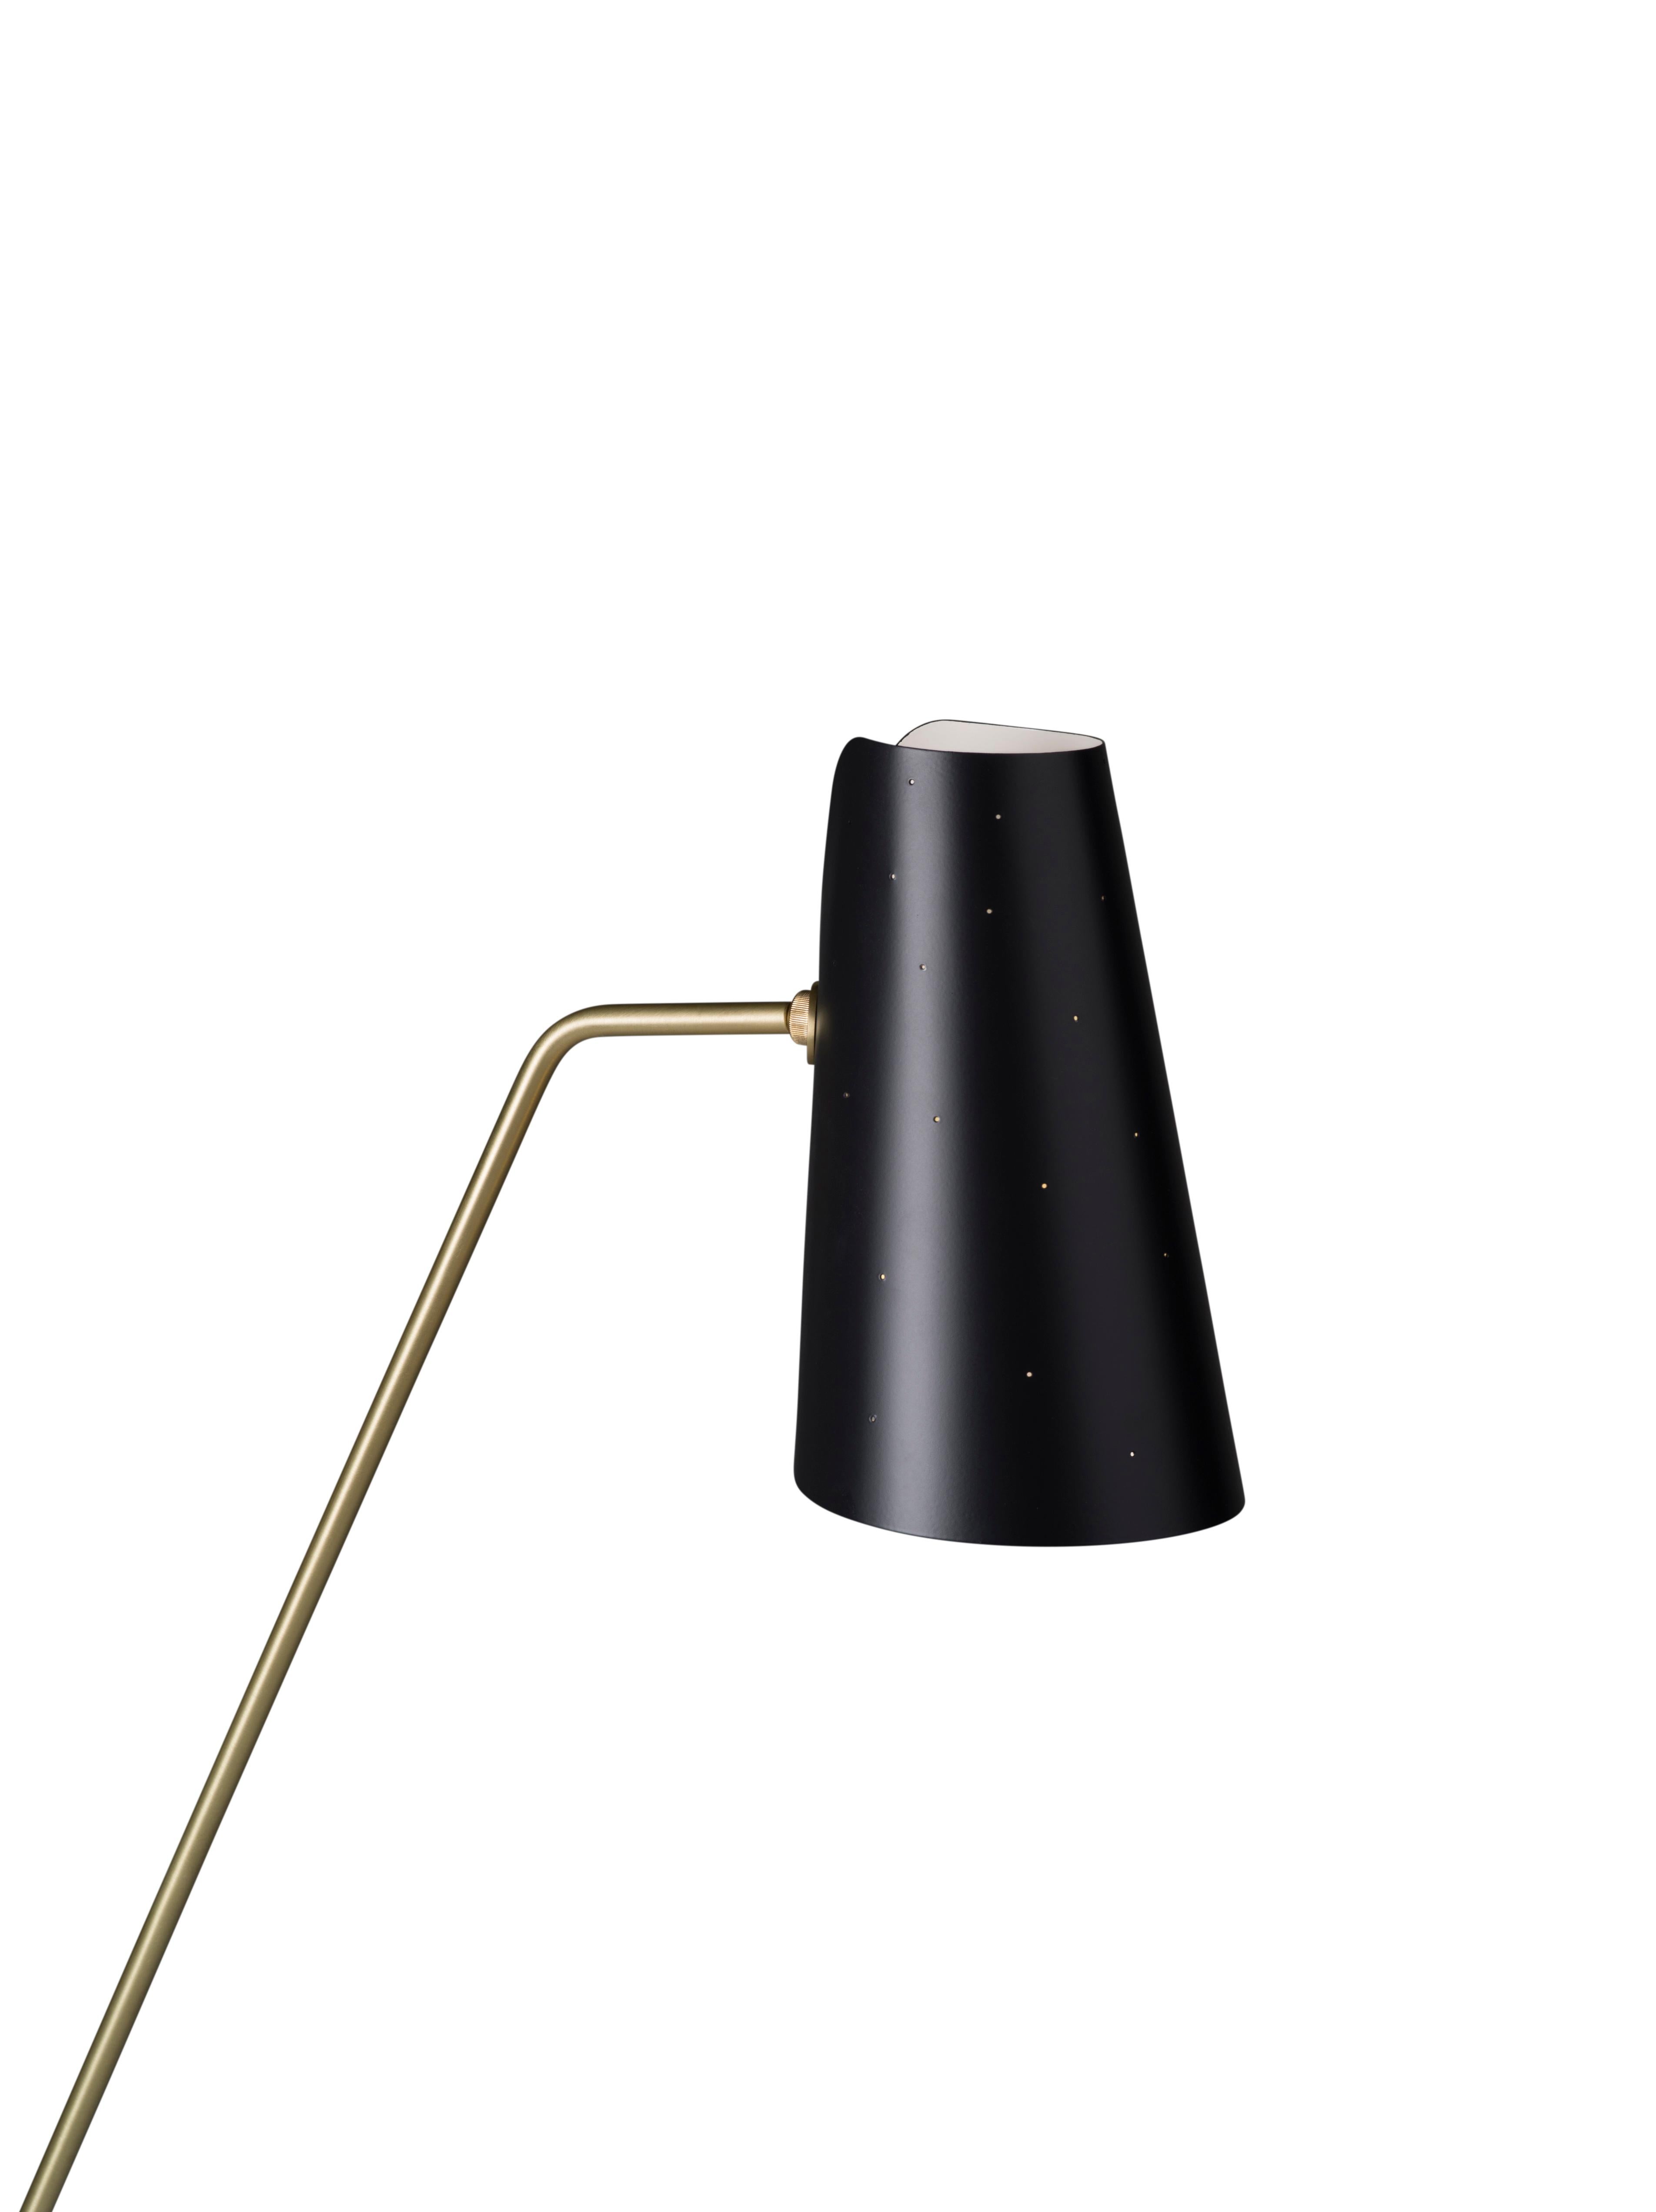 Contemporary Pierre Guariche 'G21' Adjustable Floor Lamp for Sammode Studio in Black For Sale